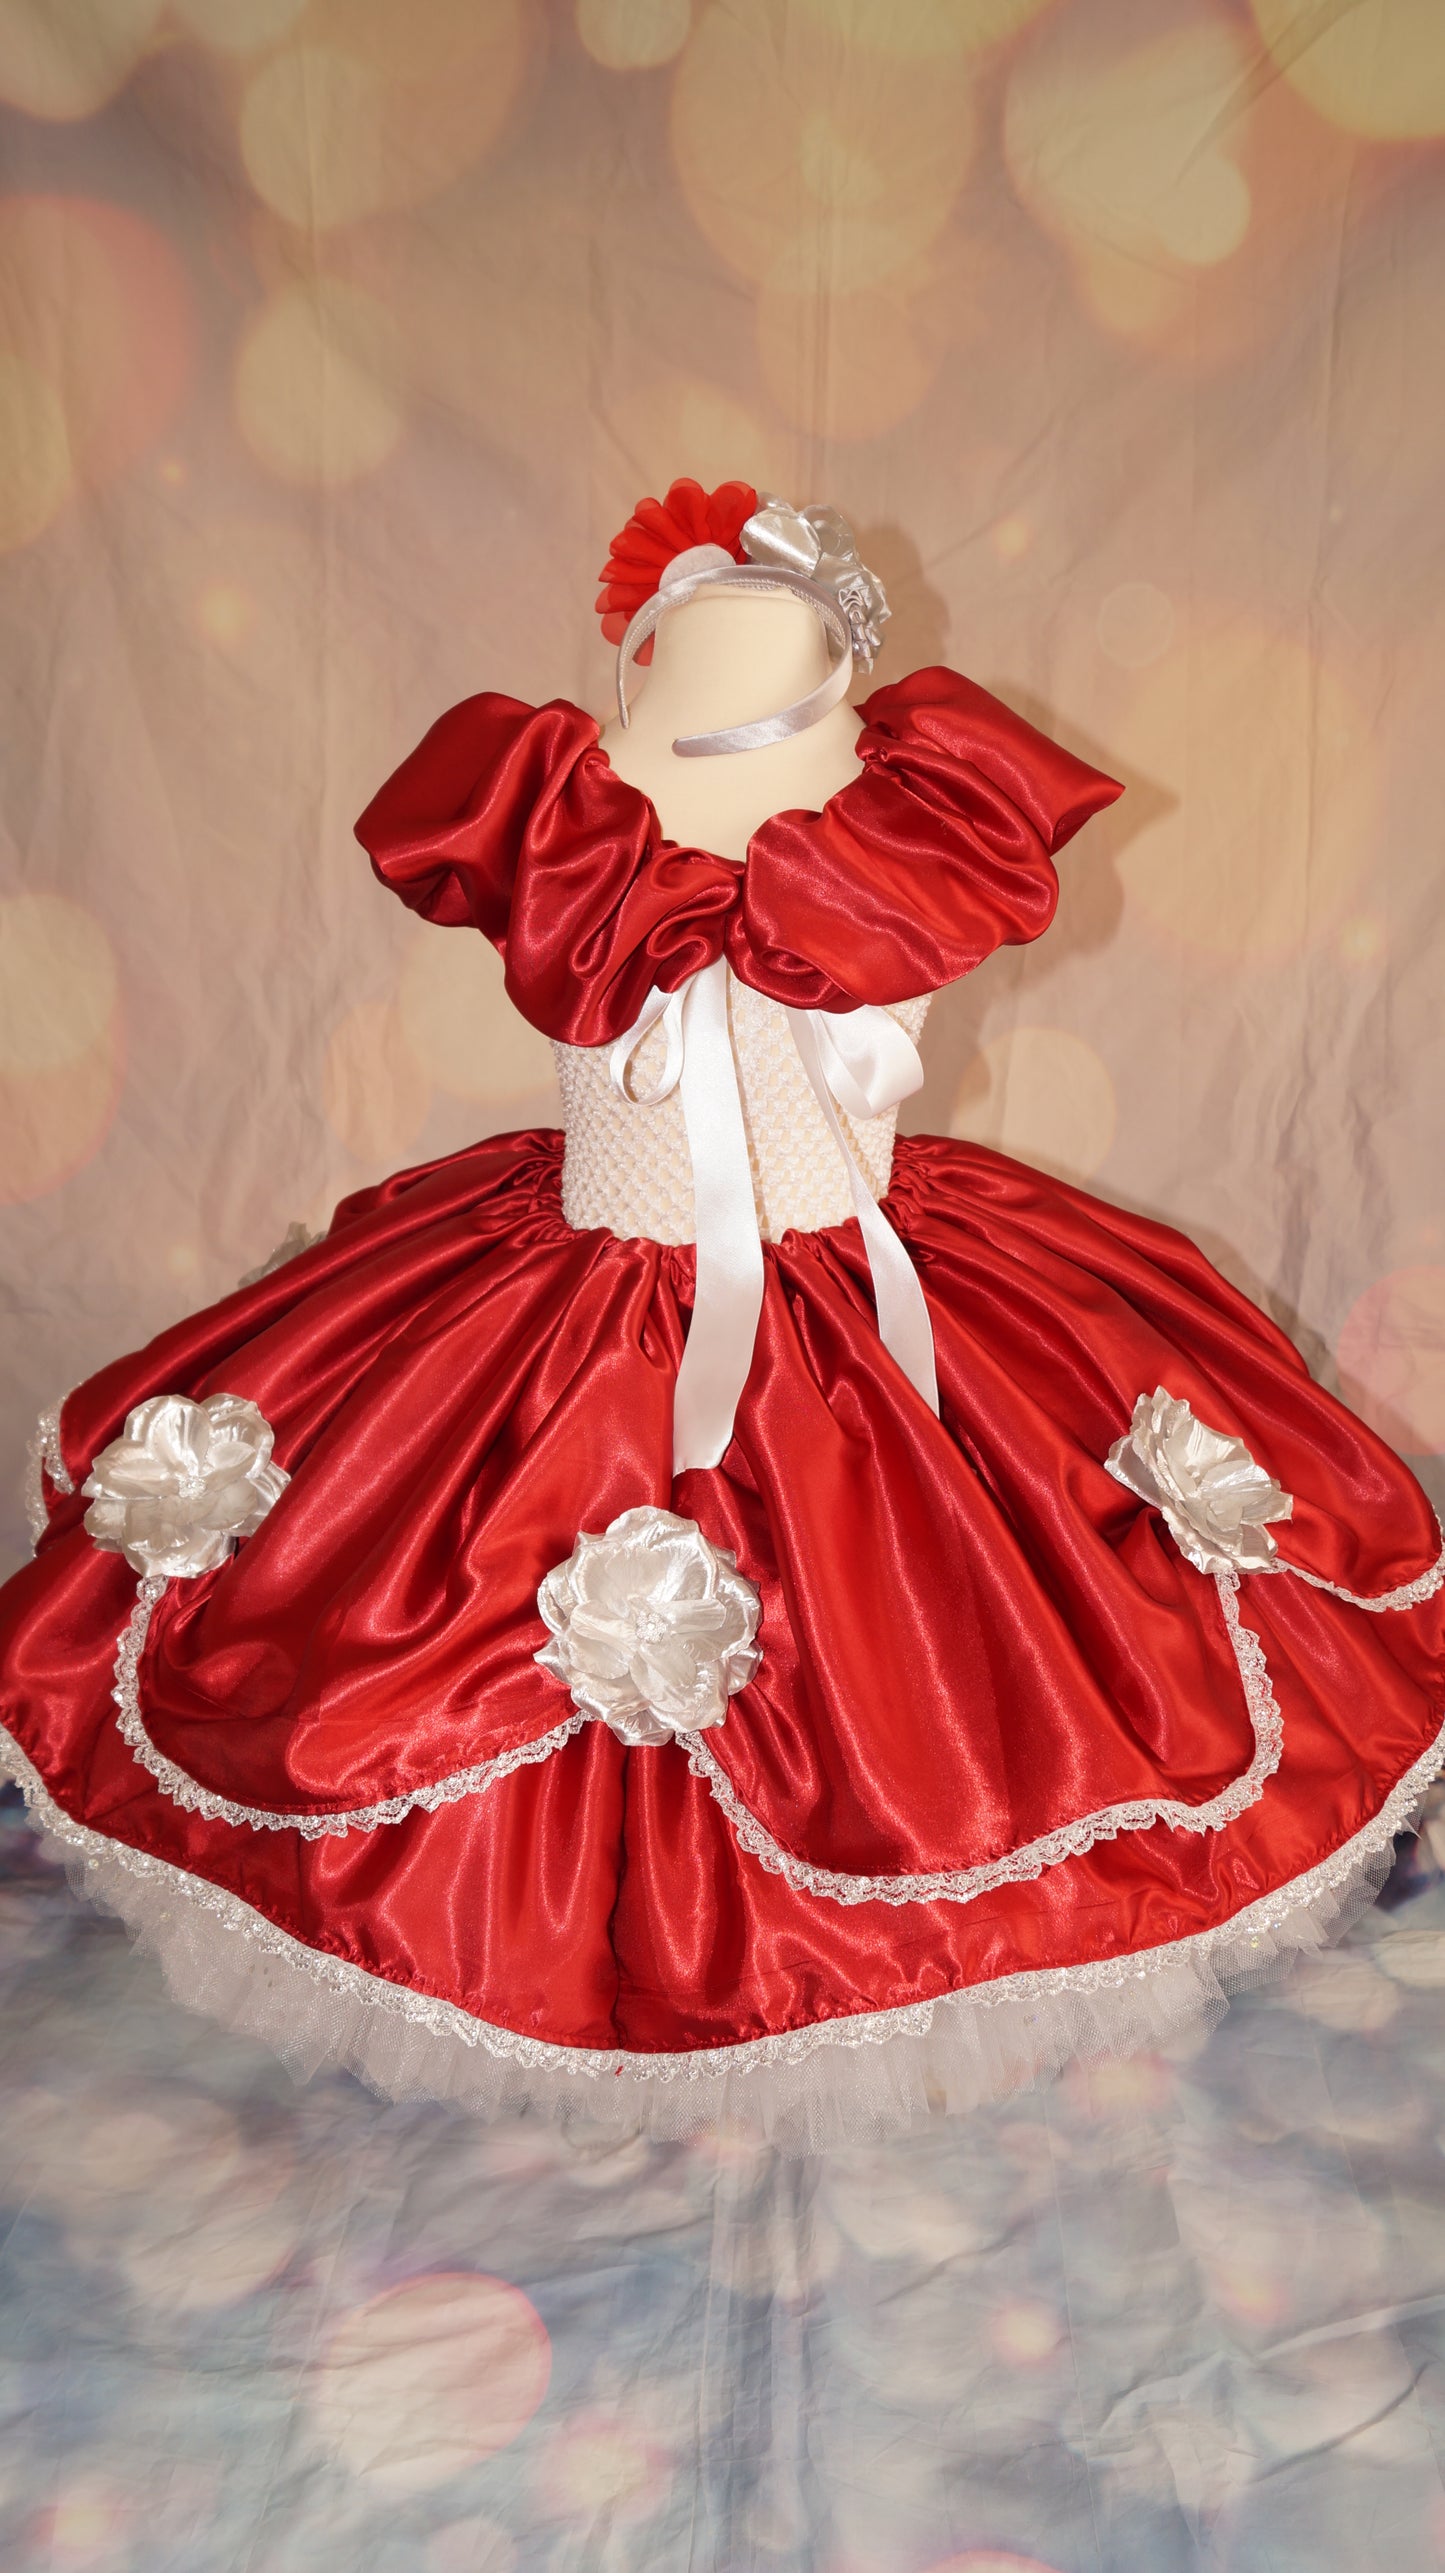 Red, White and Silver Rose Princess Tutu Dress